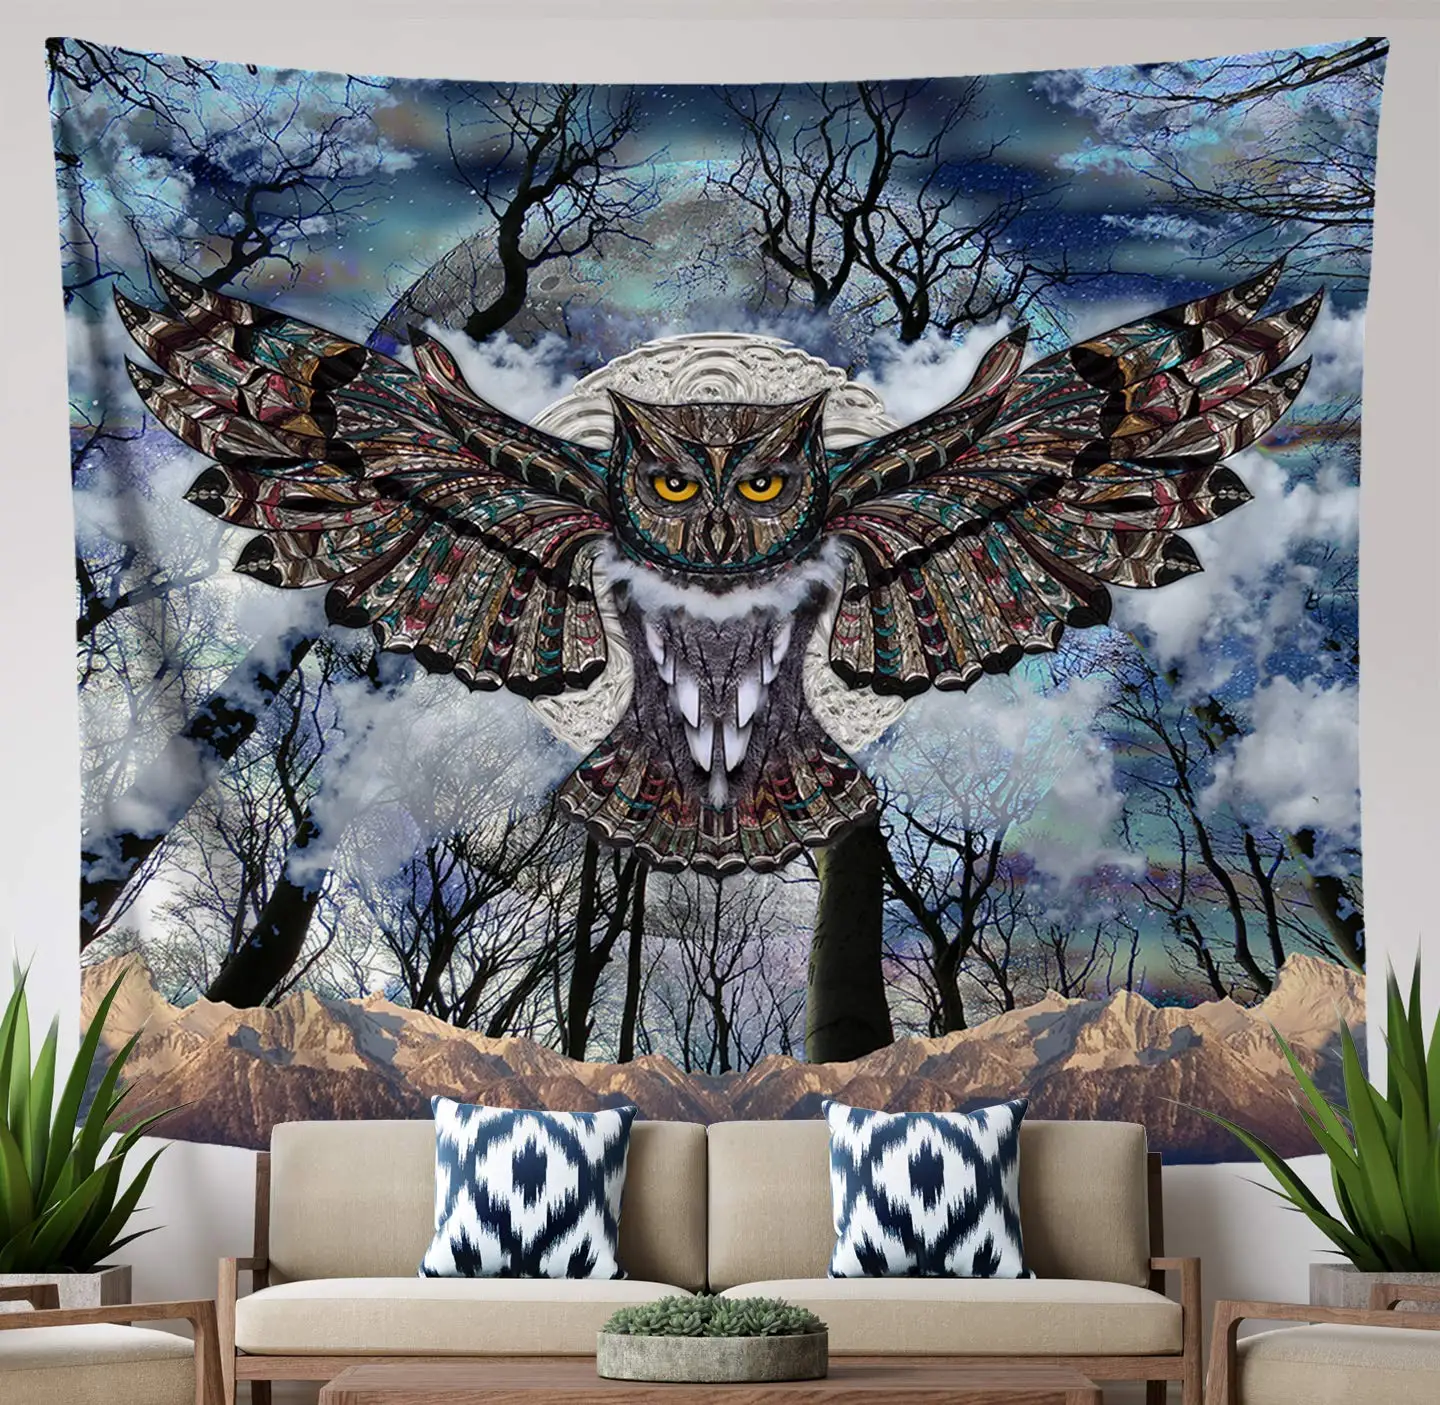 

Lucid Eye Studios Moon Owl Tapestry Blue Mandala Wall Dark Forest Design Animal Wall Hanging